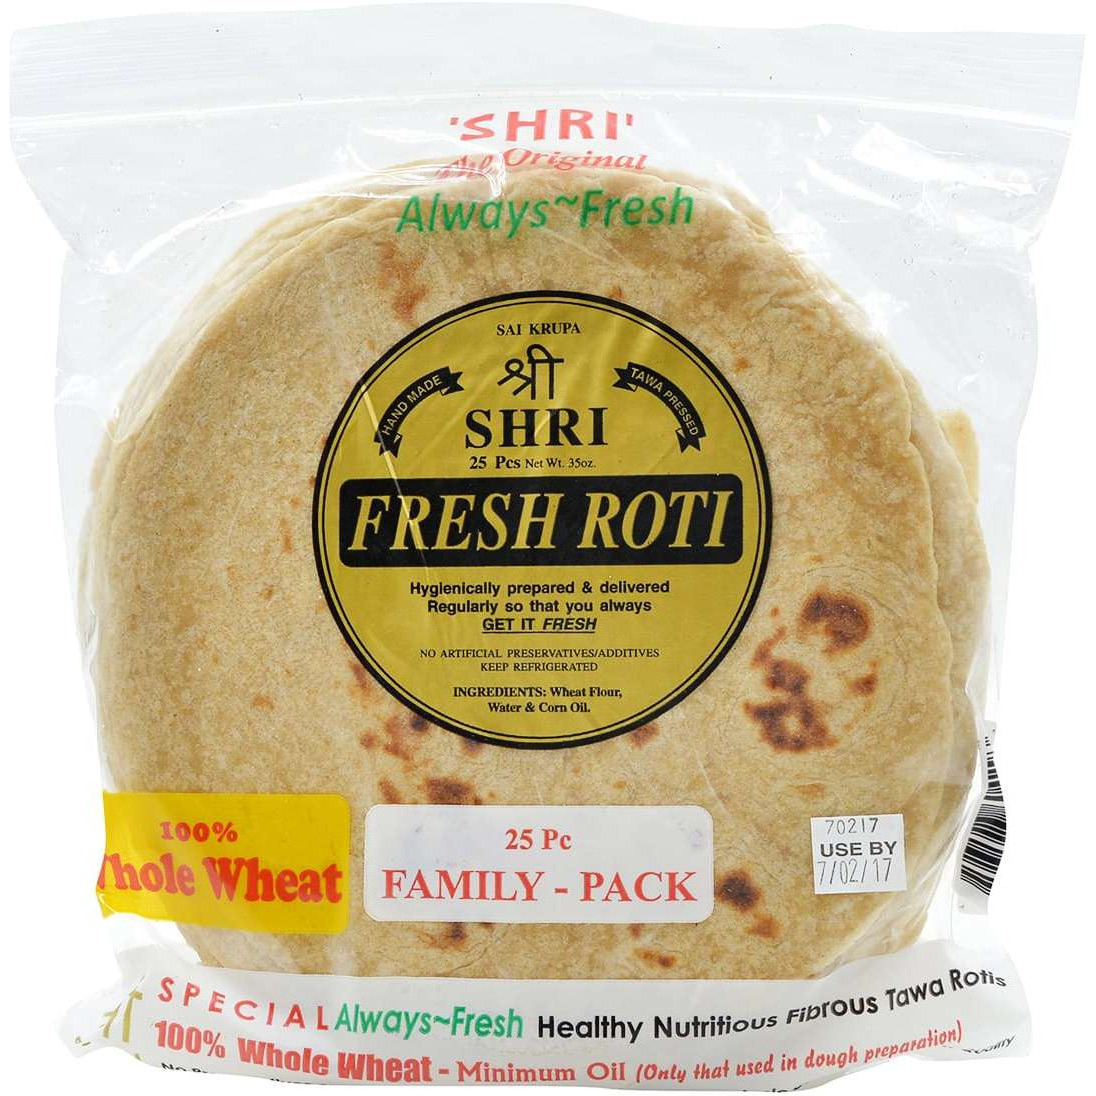 Shri Whole Wheat Roti Small Family Pack - 25 Pc